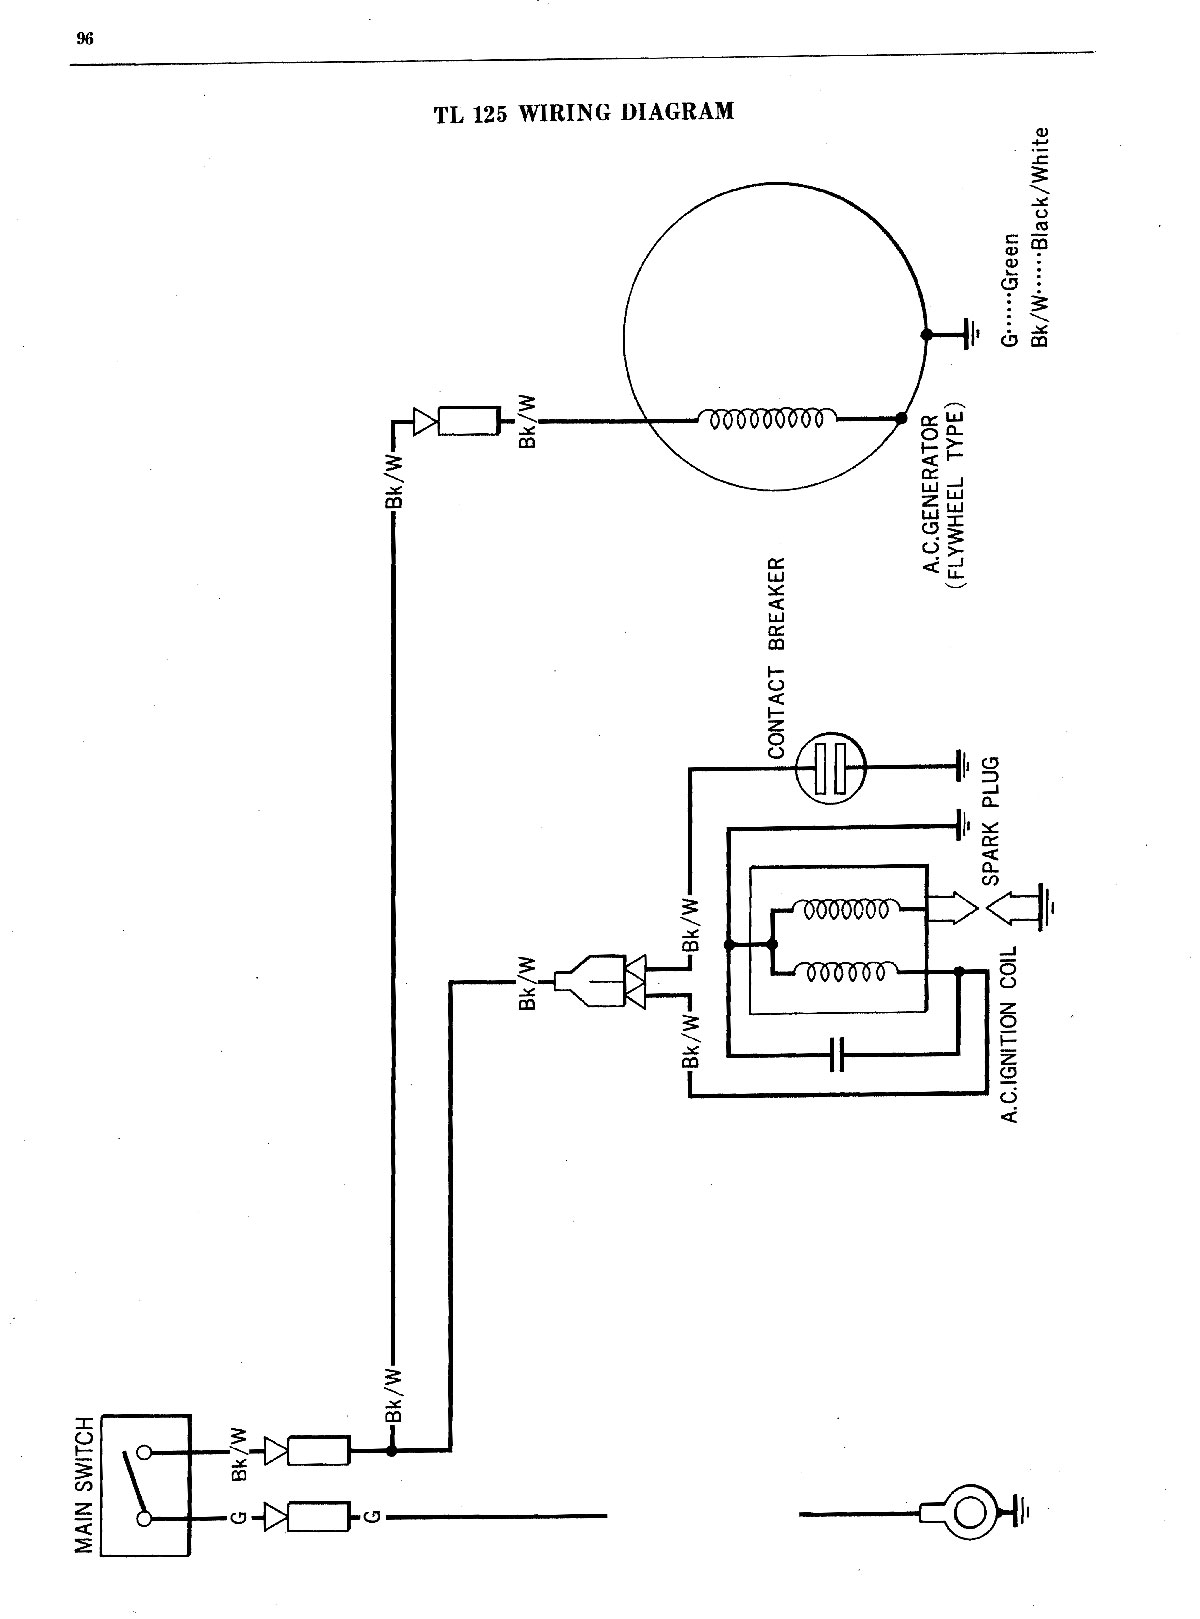 Honda cr125 wiring diagram